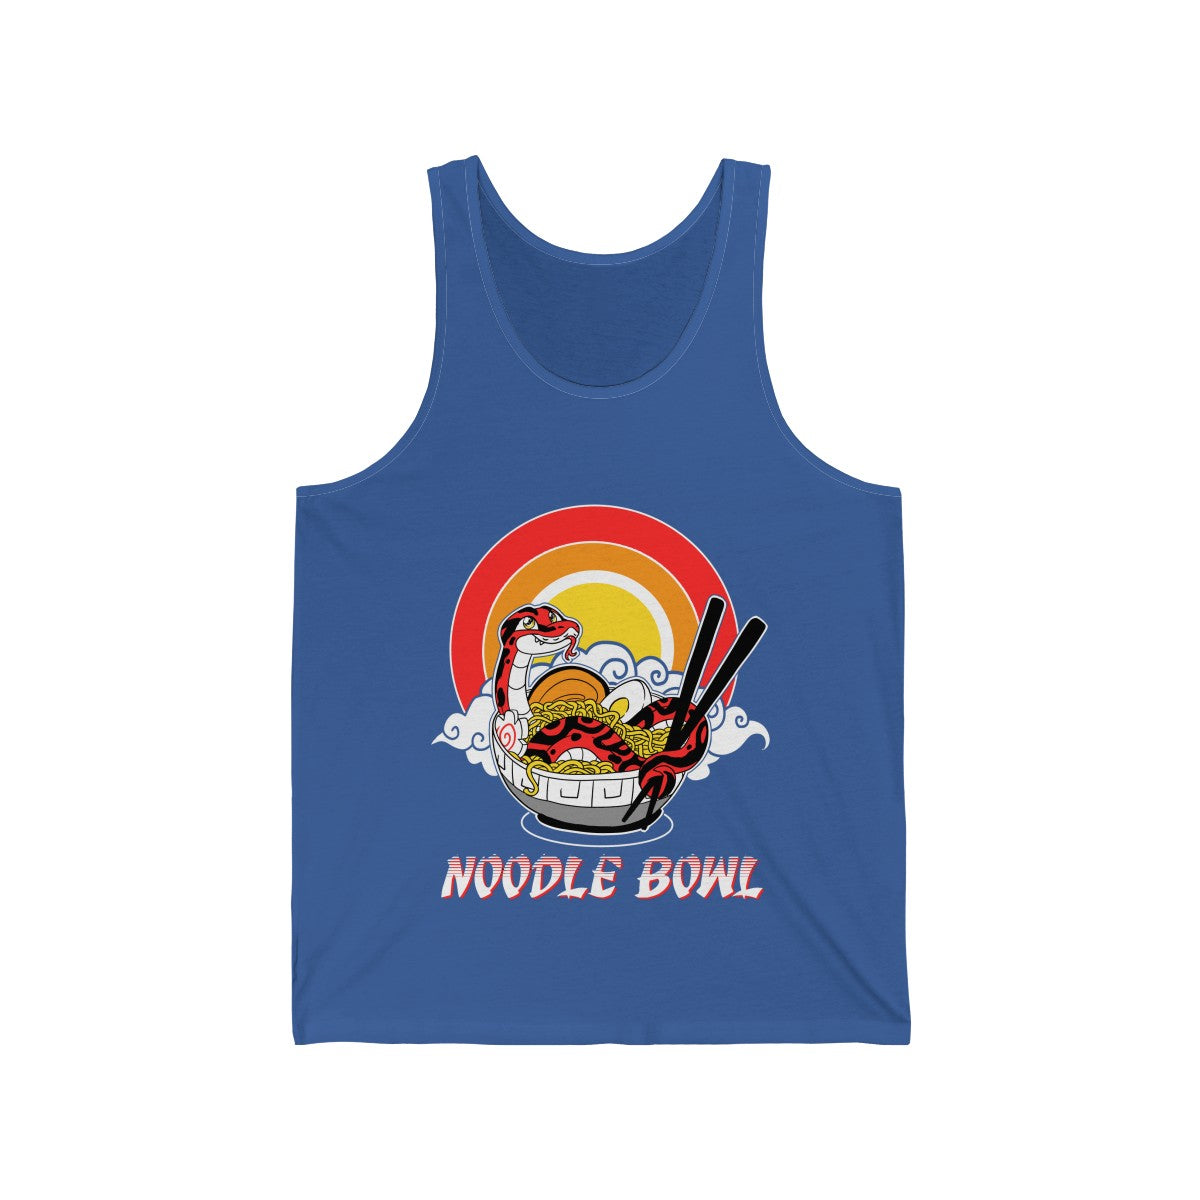 Noodle Bowl - Tank Top Tank Top Crunchy Crowe Royal Blue XS 